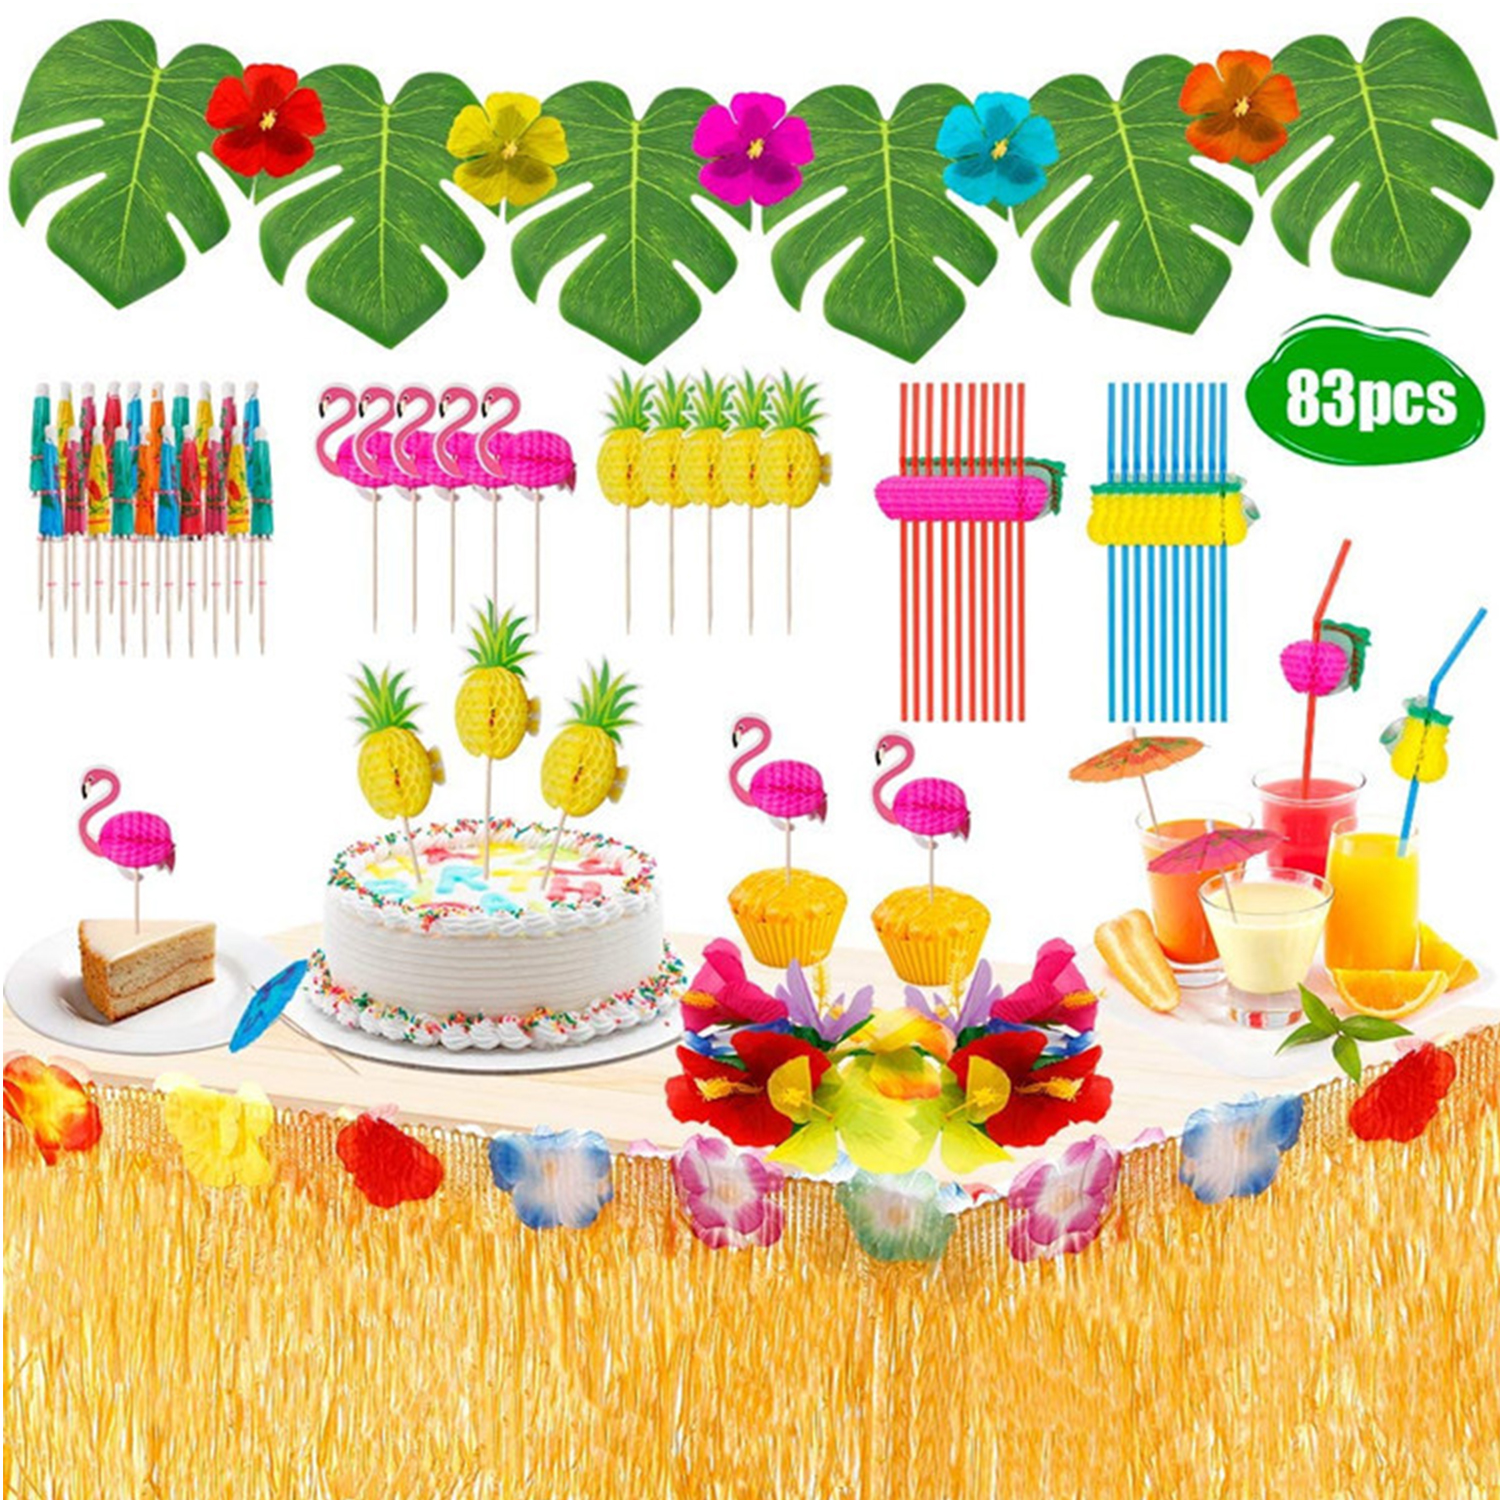 Tropical Luau Party Decoration, 83pcs Hawaiian Beach Theme Party Favors Including Hawaiian Table Skirt Palm Leaves, Hawaiian Flowers, Flamingo, Pineapple,Colorful Paper Umbrella, Fruit Straws - image 1 of 7